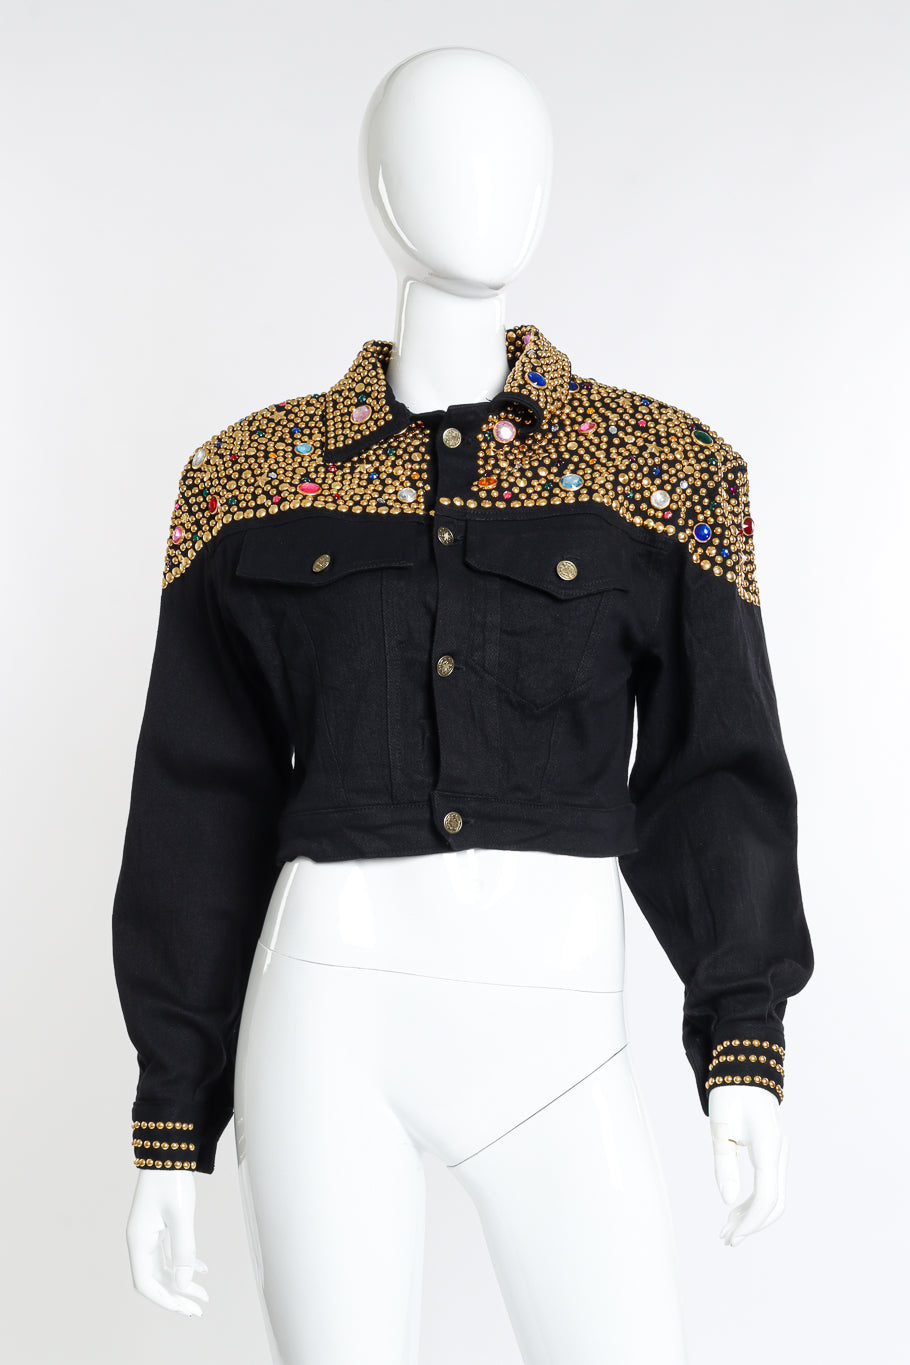 Vintage Cross Walk LA Studded Denim Jacket front on mannequin @recess la